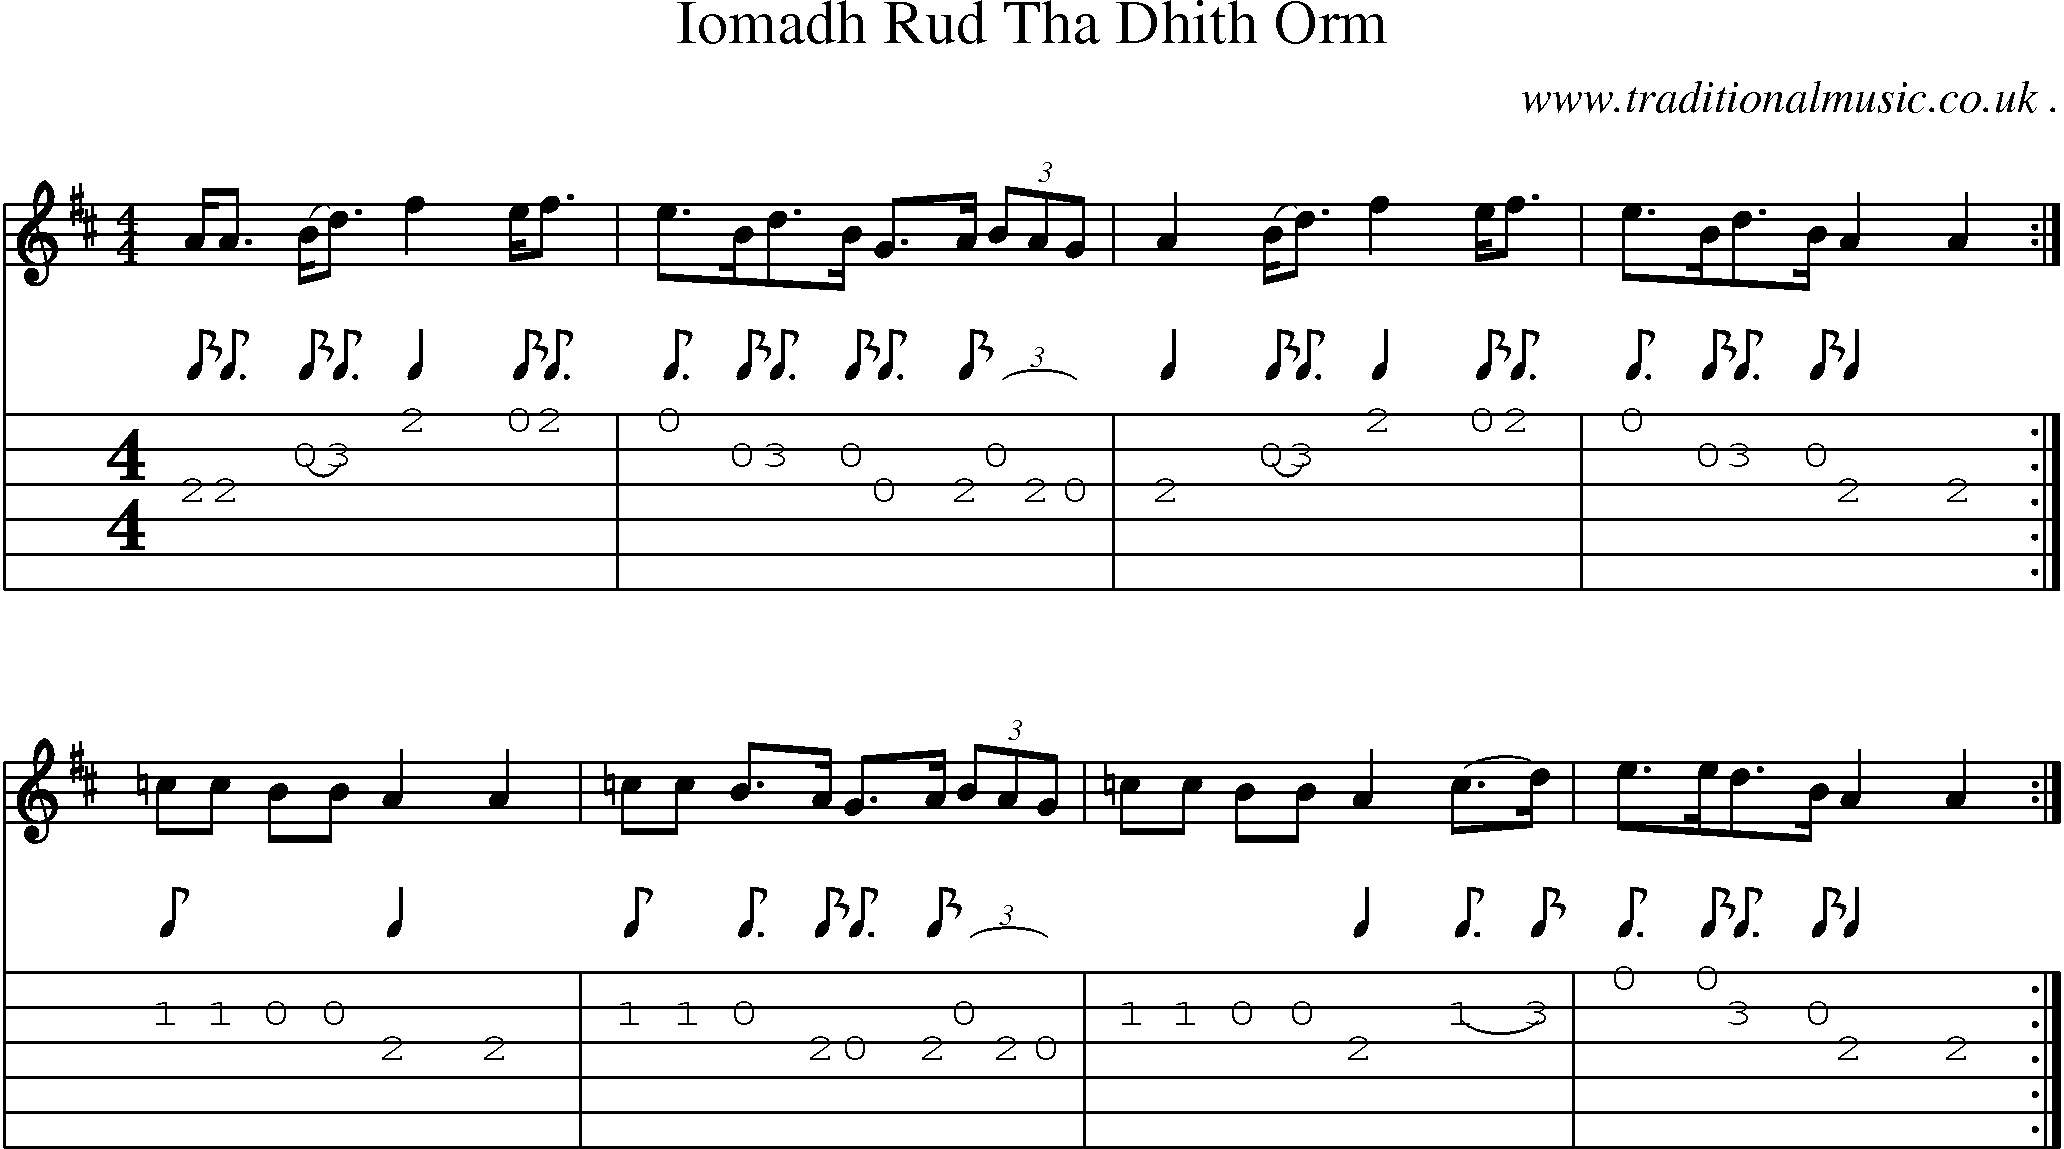 Sheet-Music and Guitar Tabs for Iomadh Rud Tha Dhith Orm